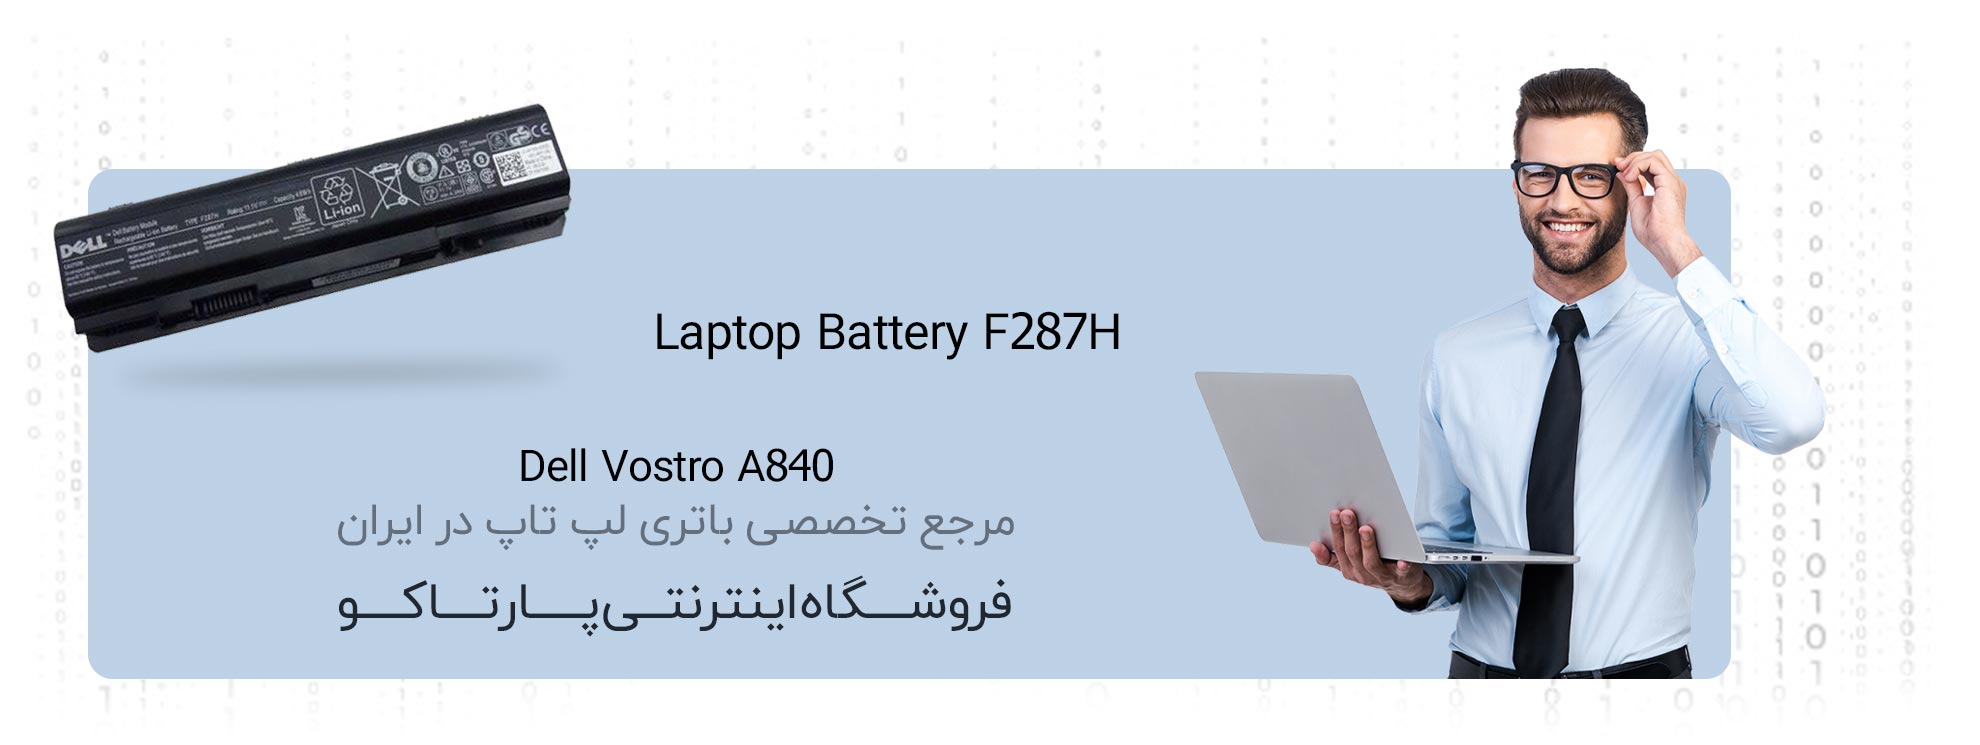 باتری لپ تاپ دل VOSTRO A840